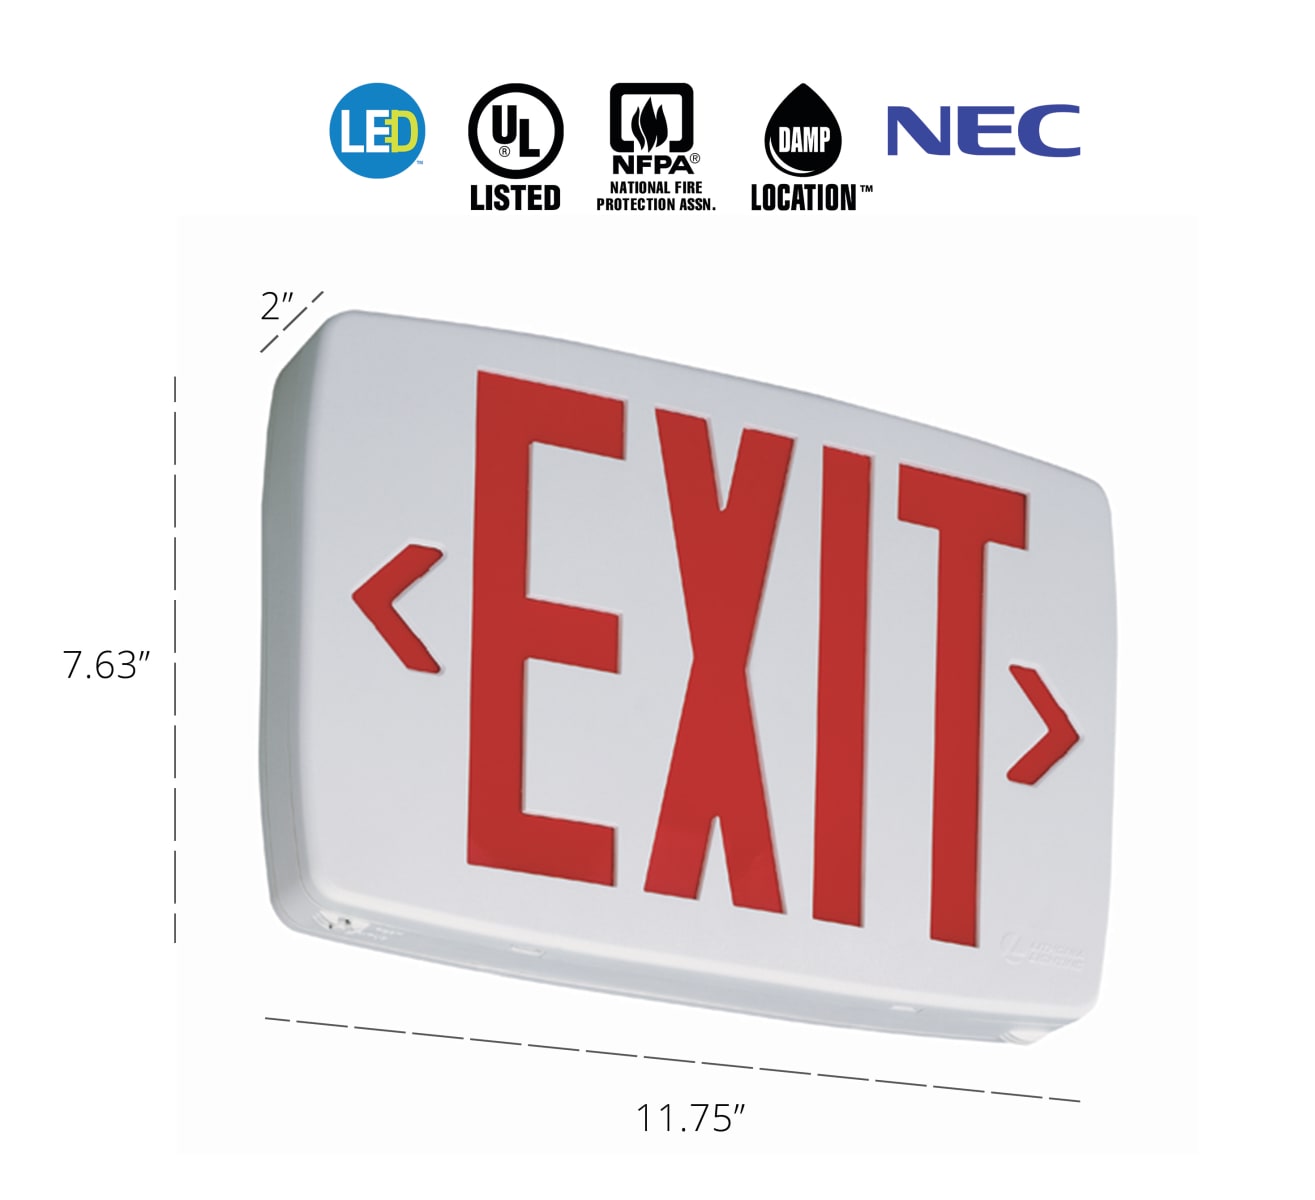 Lithonia Lighting LQM S W 3 G 120/277 EL N GRN LED Emergency Exit Sign for sale online 